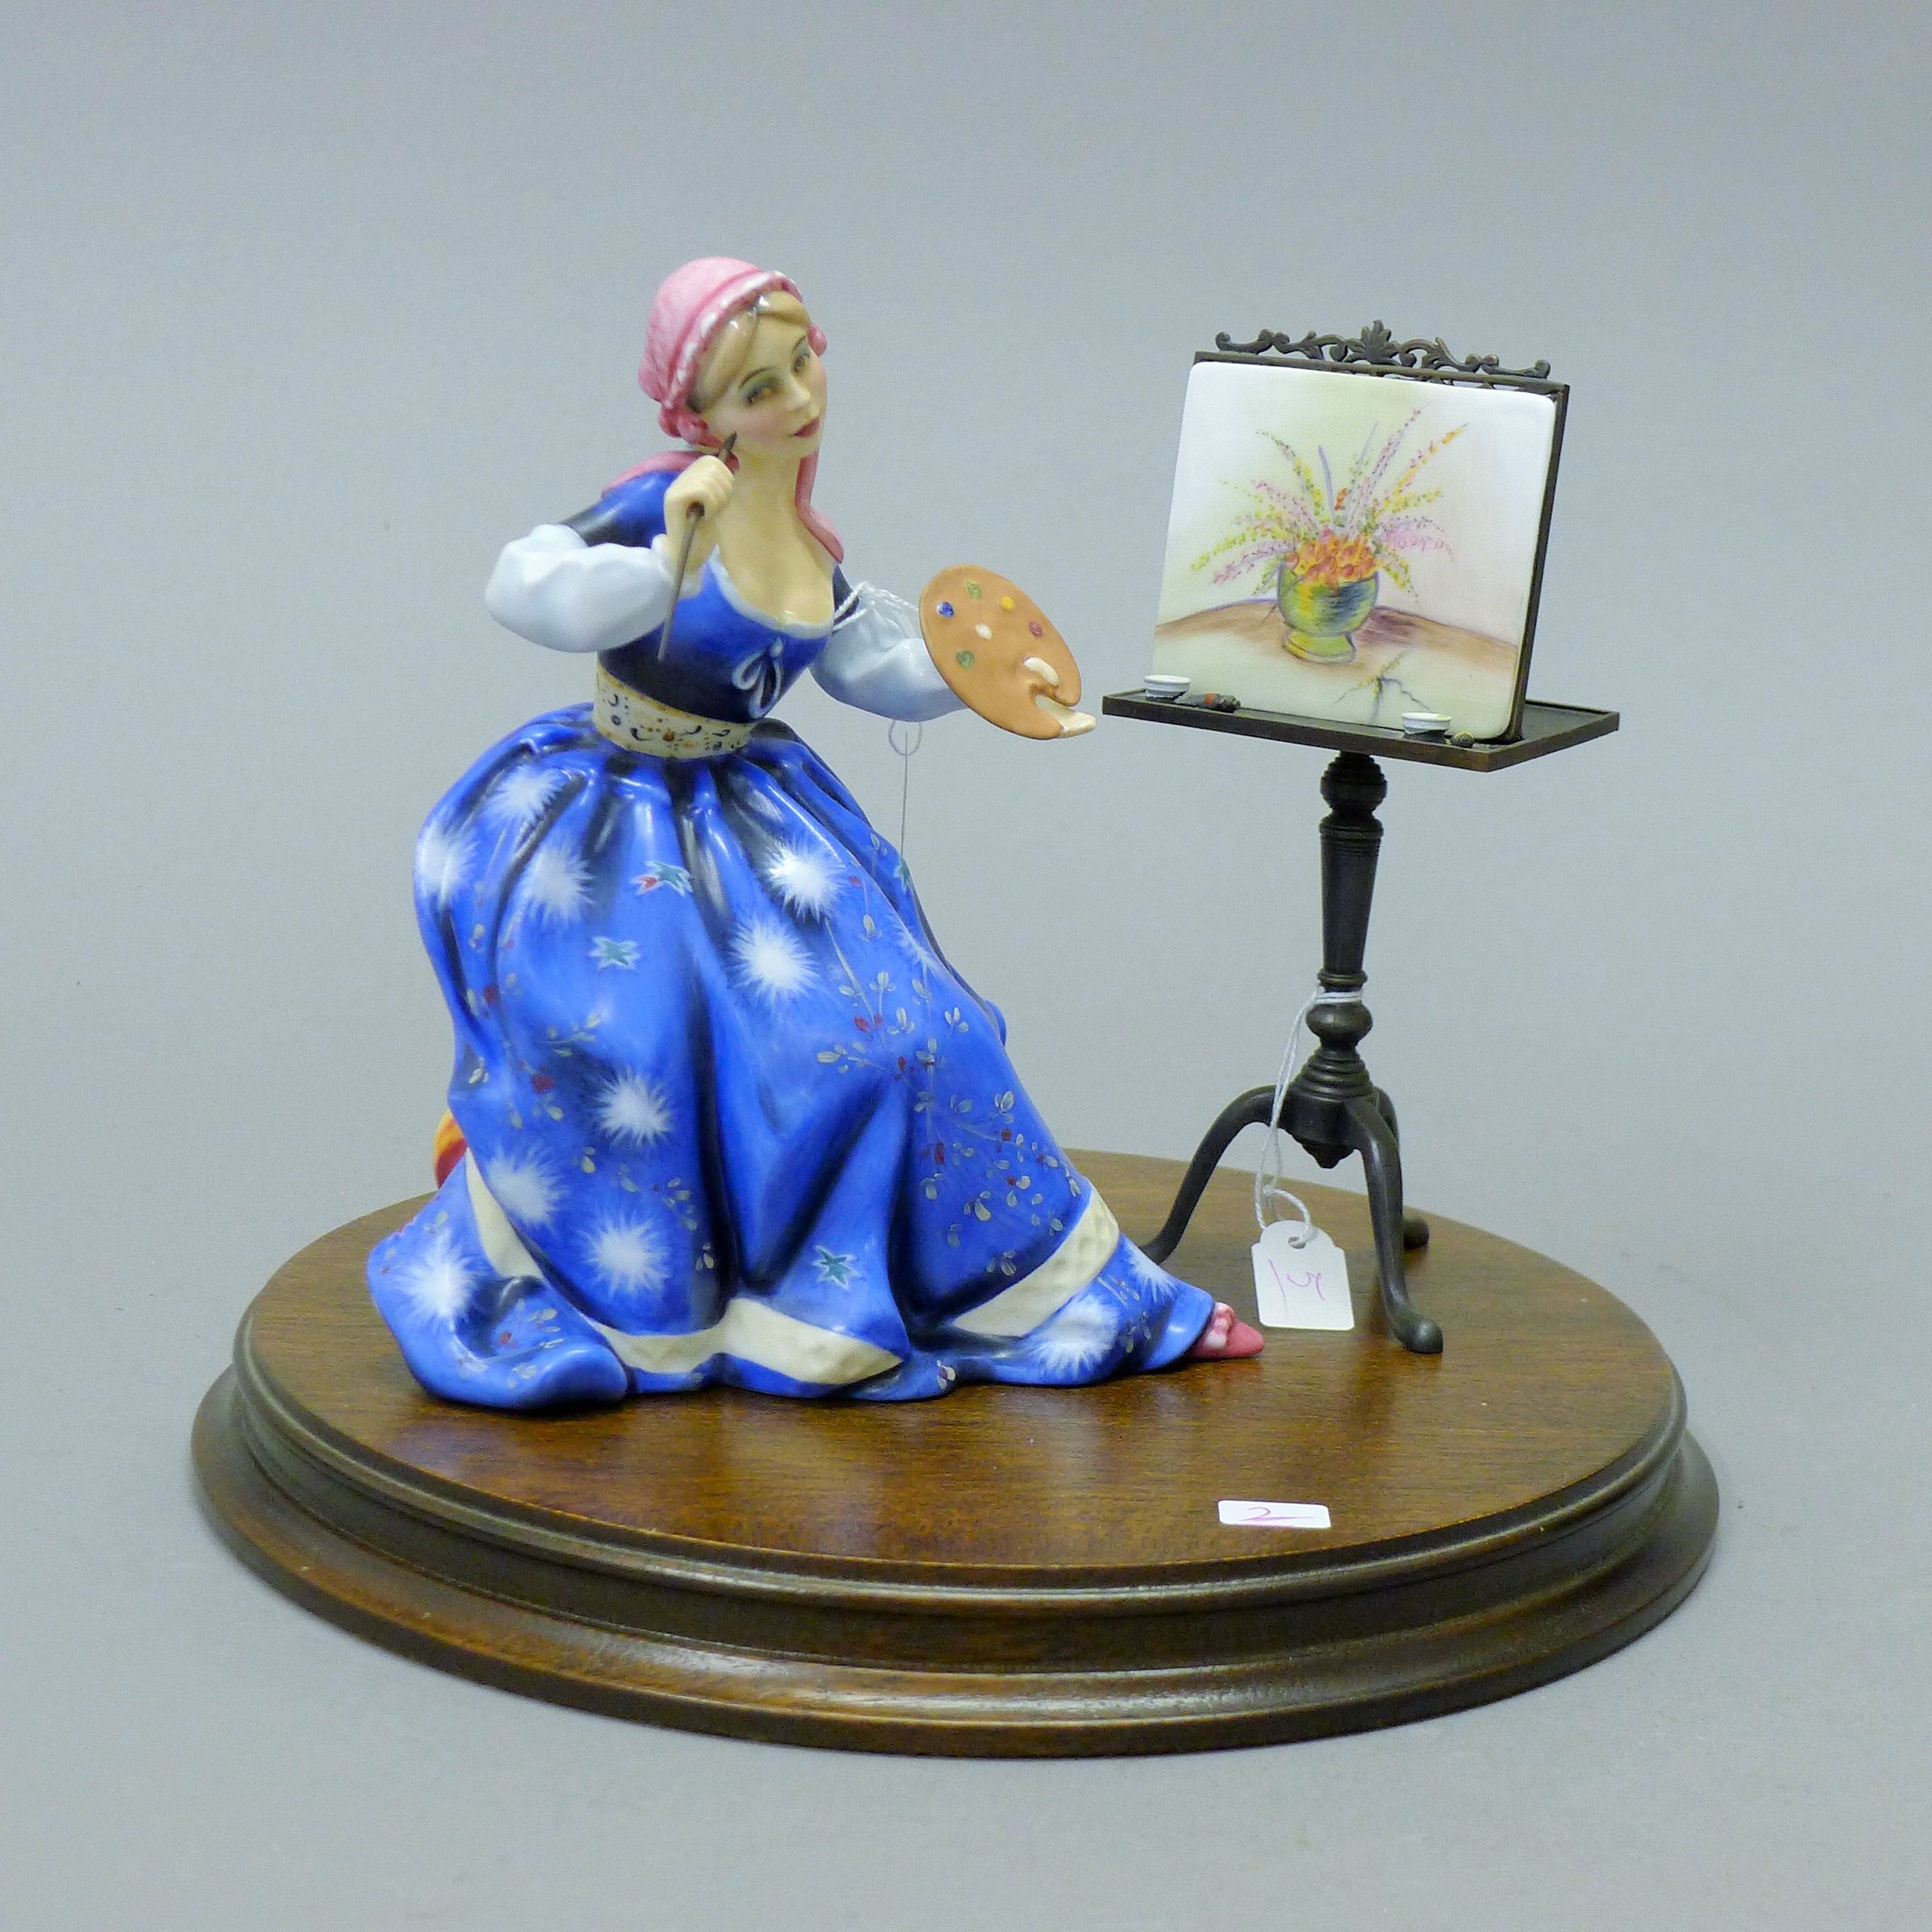 A Royal Doulton figurine, Painting, HN3012. 17 cm high.